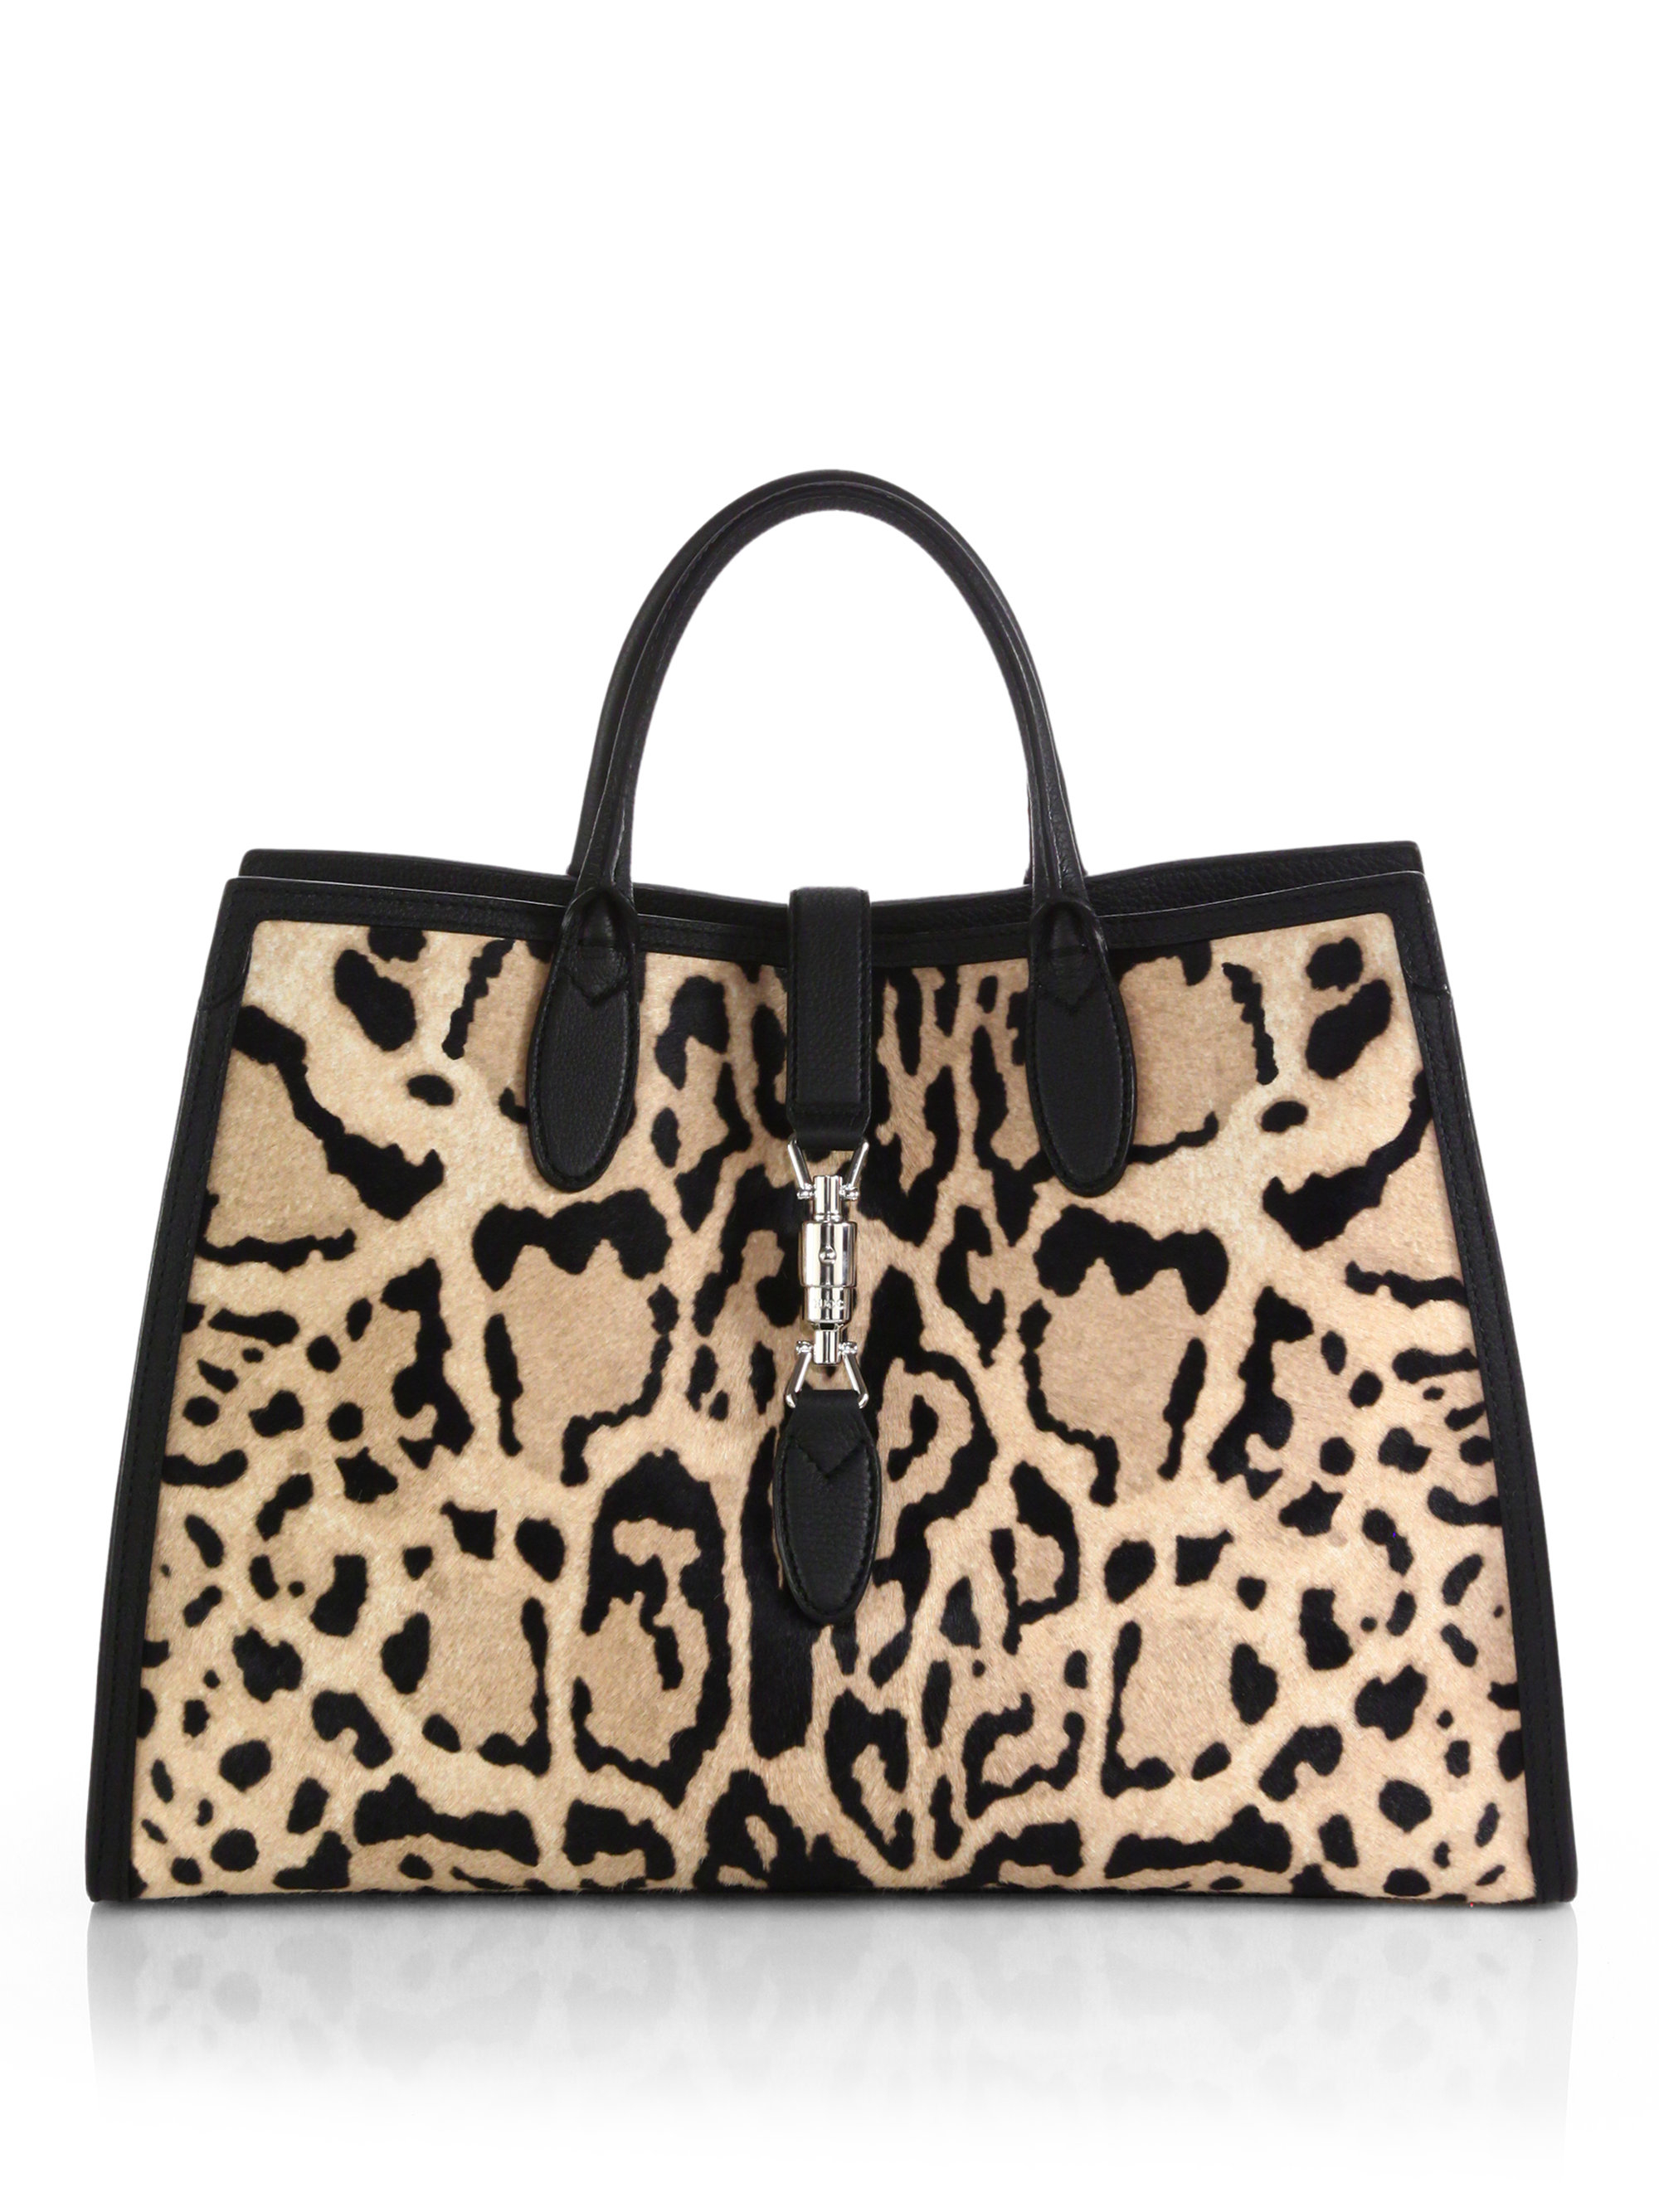 Lyst - Gucci Jackie Soft Leopard Print Calf Hair Top Handle Bag